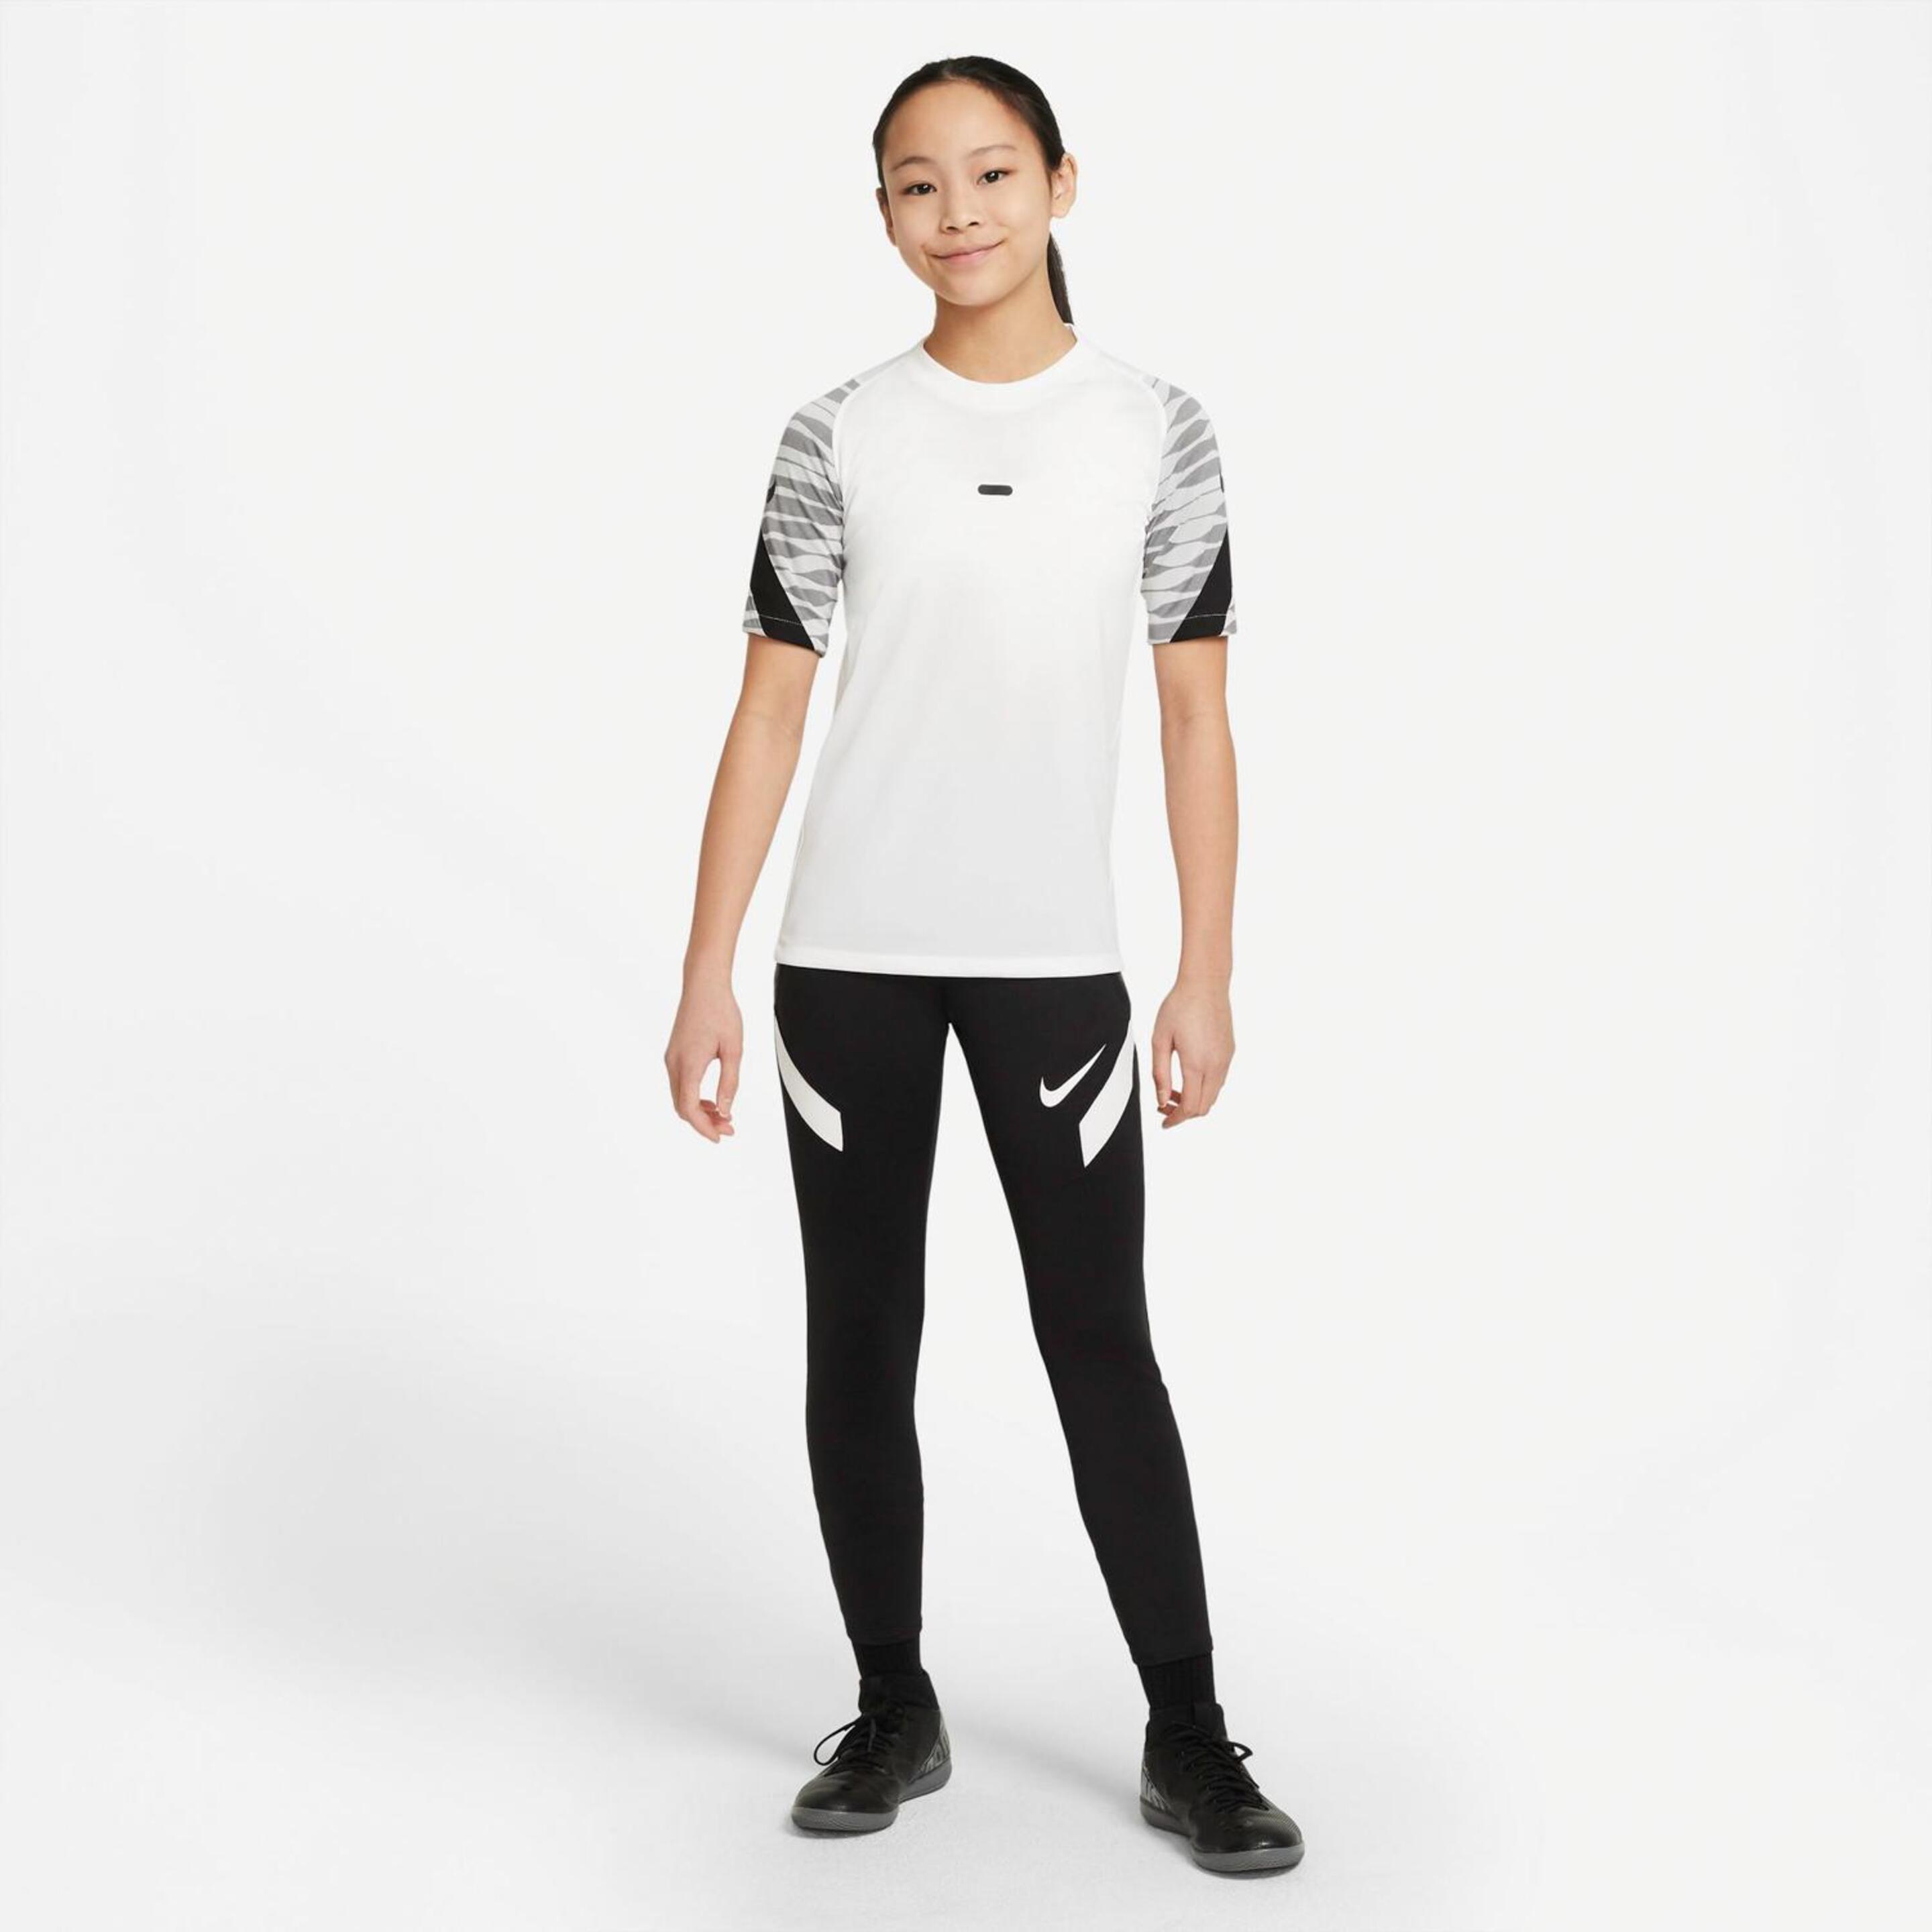 T-shirt Nike Dri-fit Strike